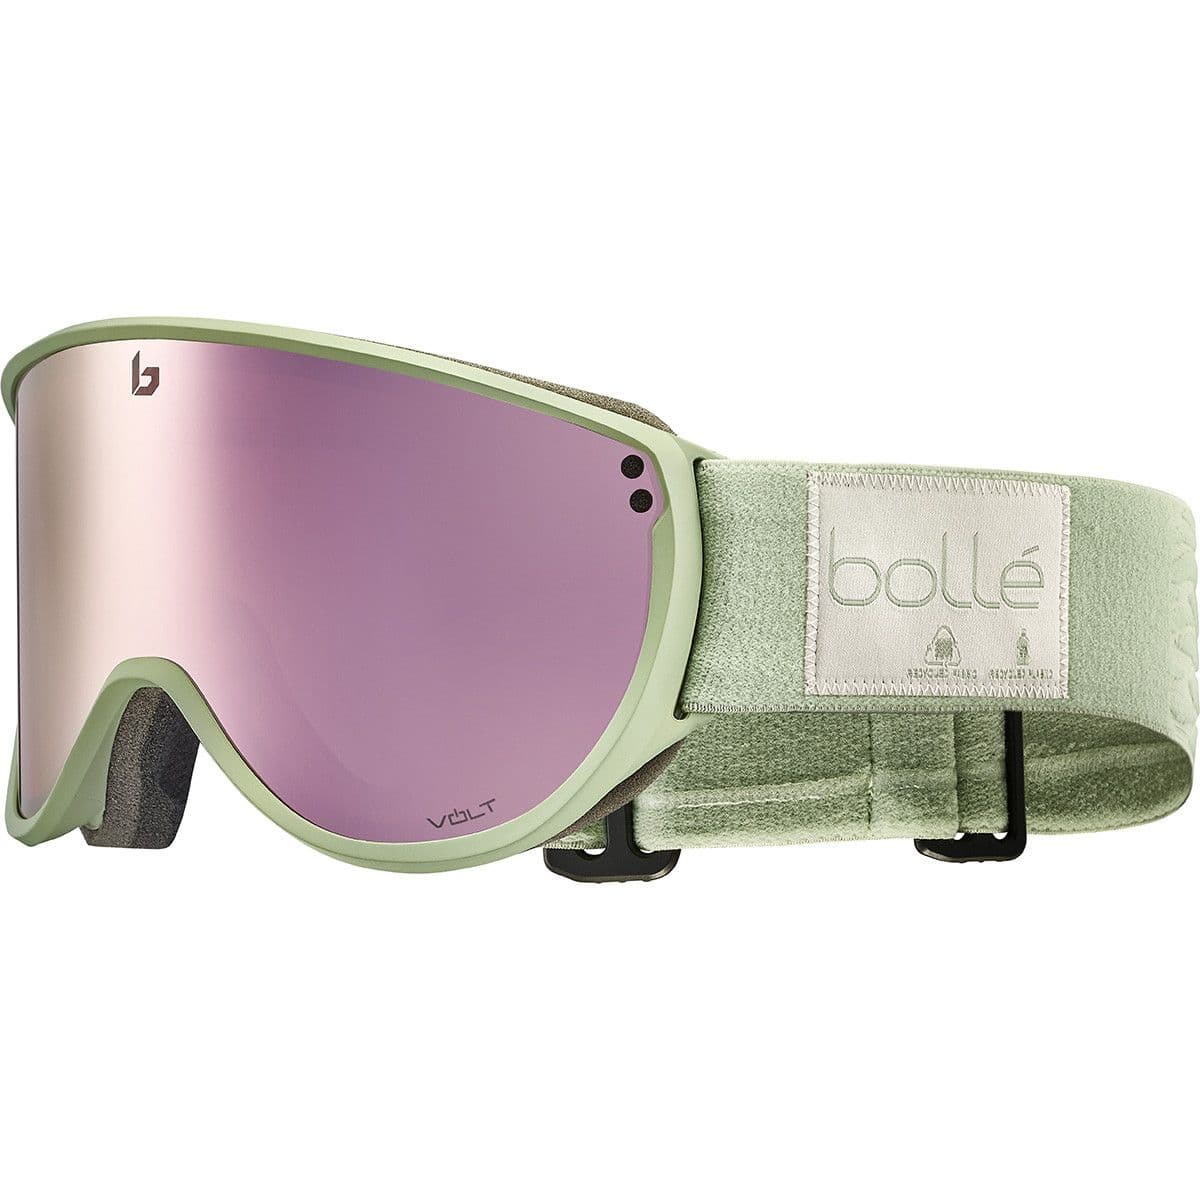 Bolle Blanca Eco Ski Goggles